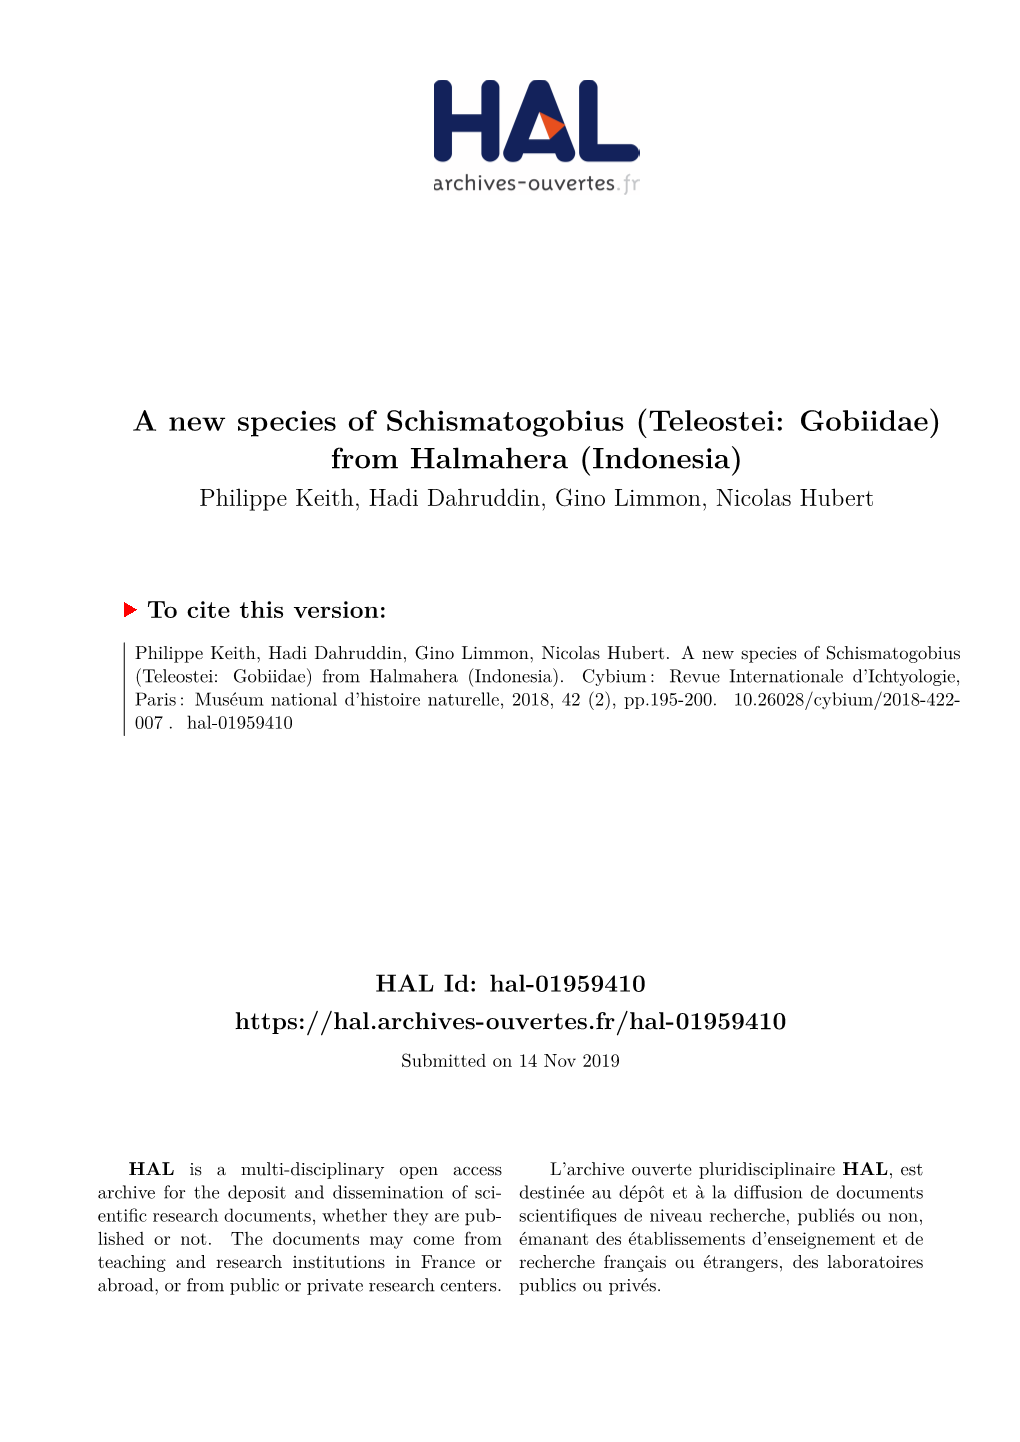 A New Species of Schismatogobius (Teleostei: Gobiidae) from Halmahera (Indonesia) Philippe Keith, Hadi Dahruddin, Gino Limmon, Nicolas Hubert